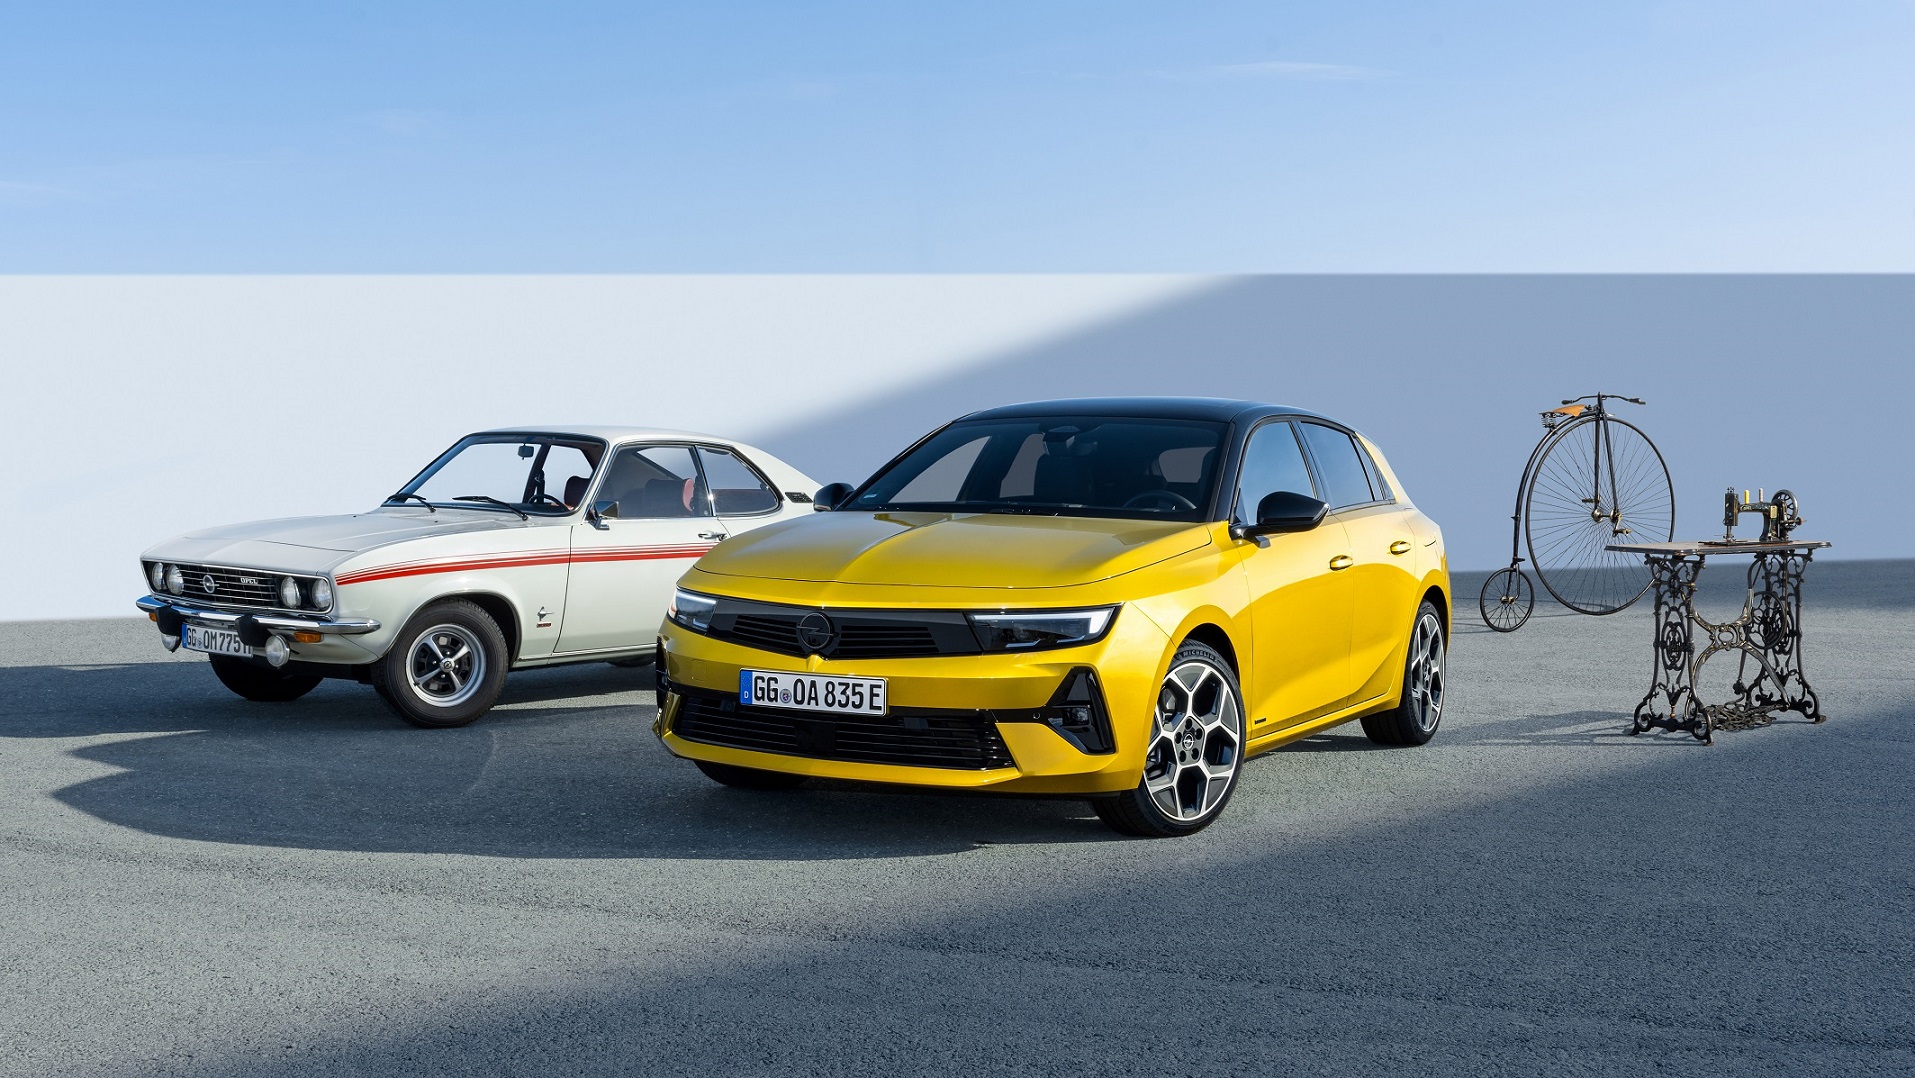 Opel celebrates 160 years of innovation